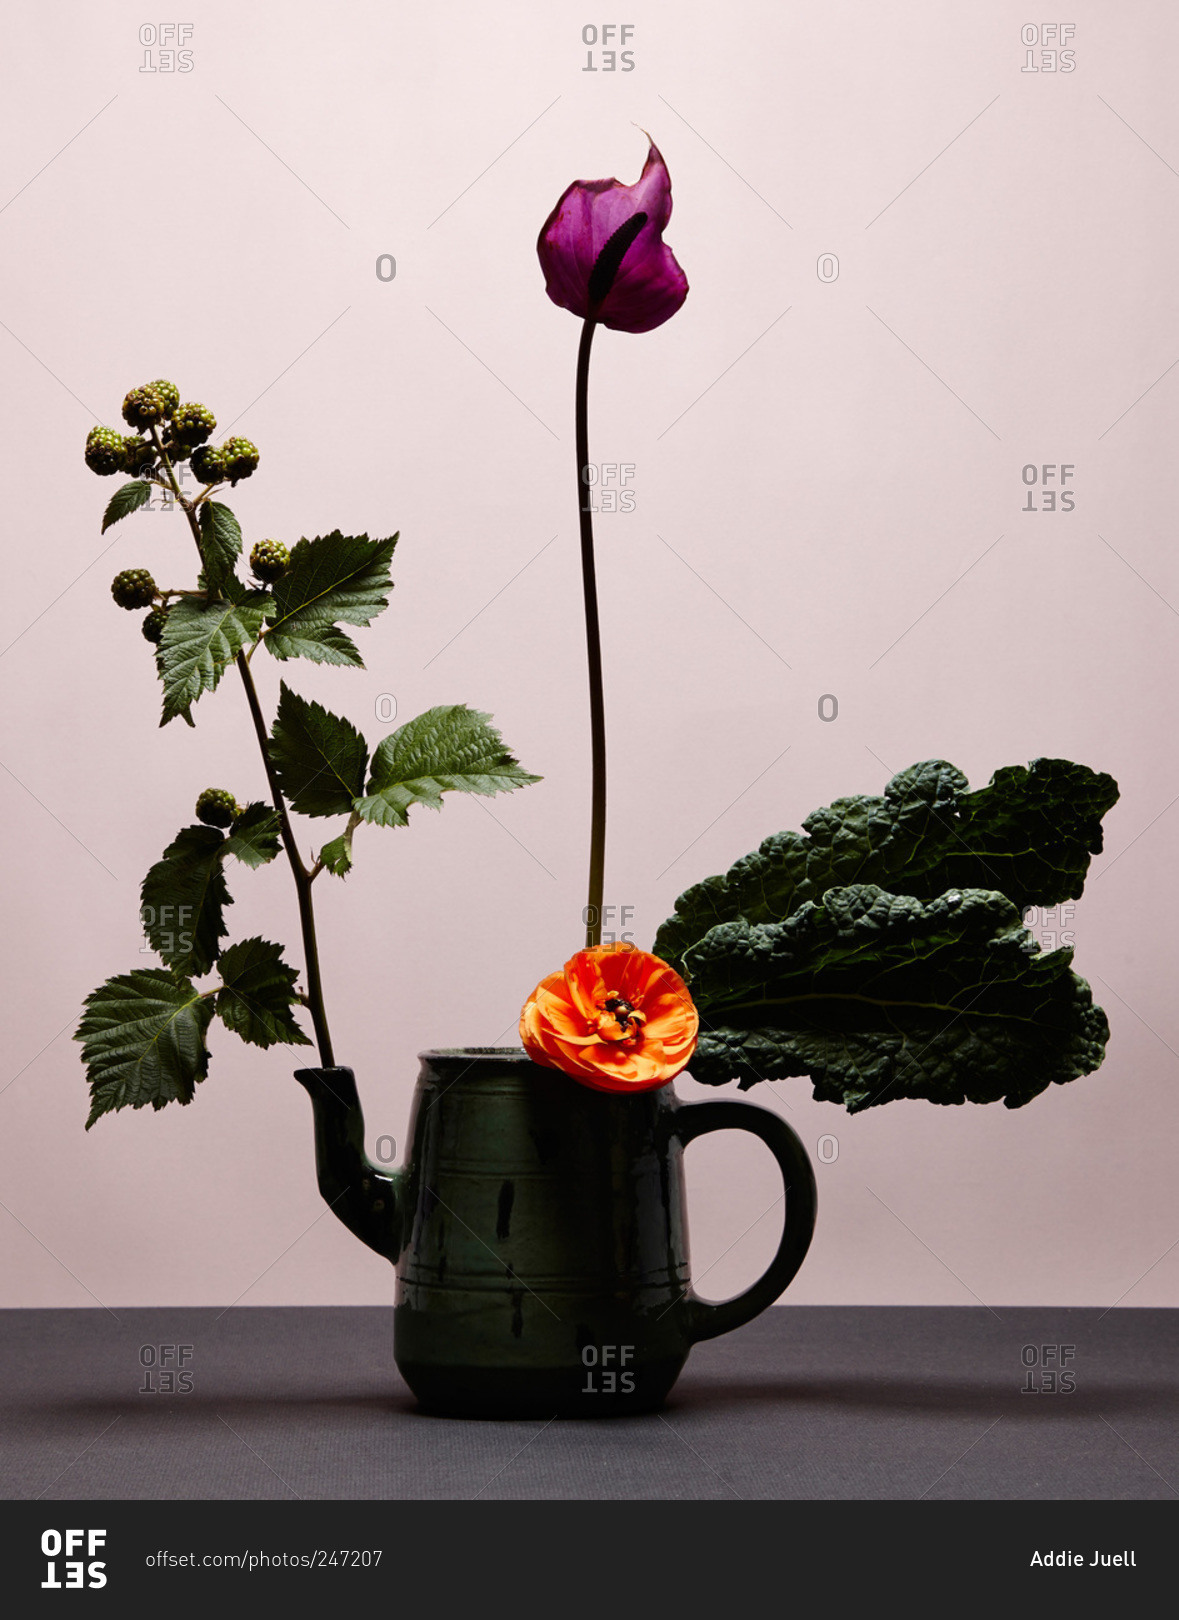 A lily and ranunculus flower arrangement